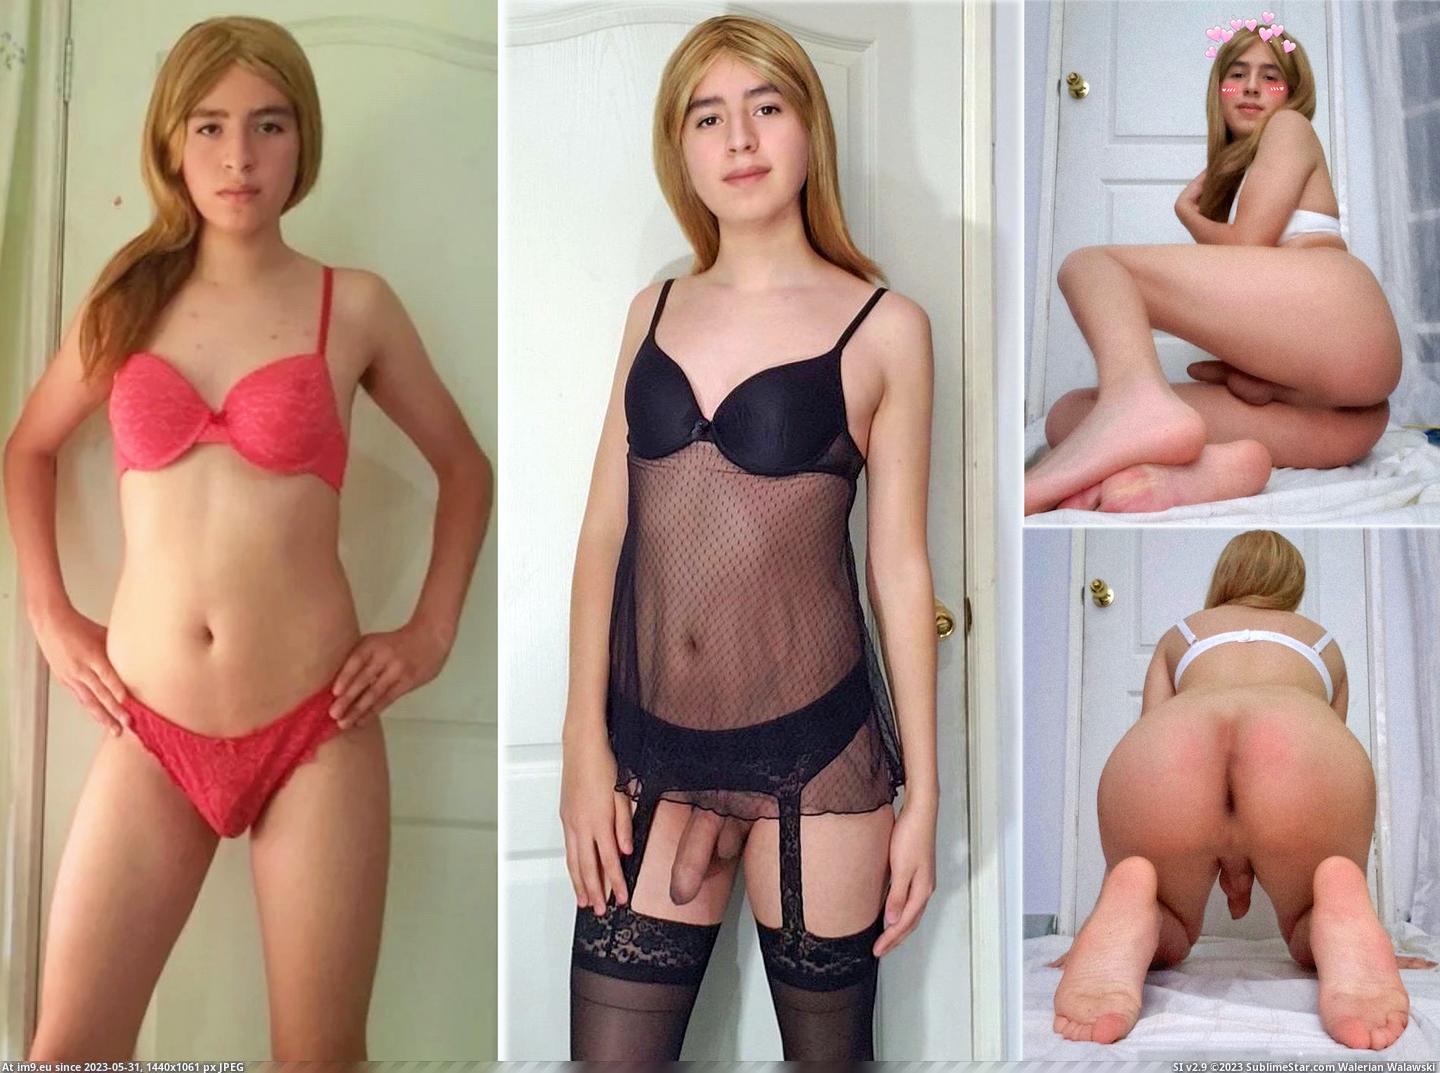 #Ass #Amateur #Tgirl #Tranny #Transgender #Blonde #Shemale 1175463 Pic. (Obraz z album Instant Upload))